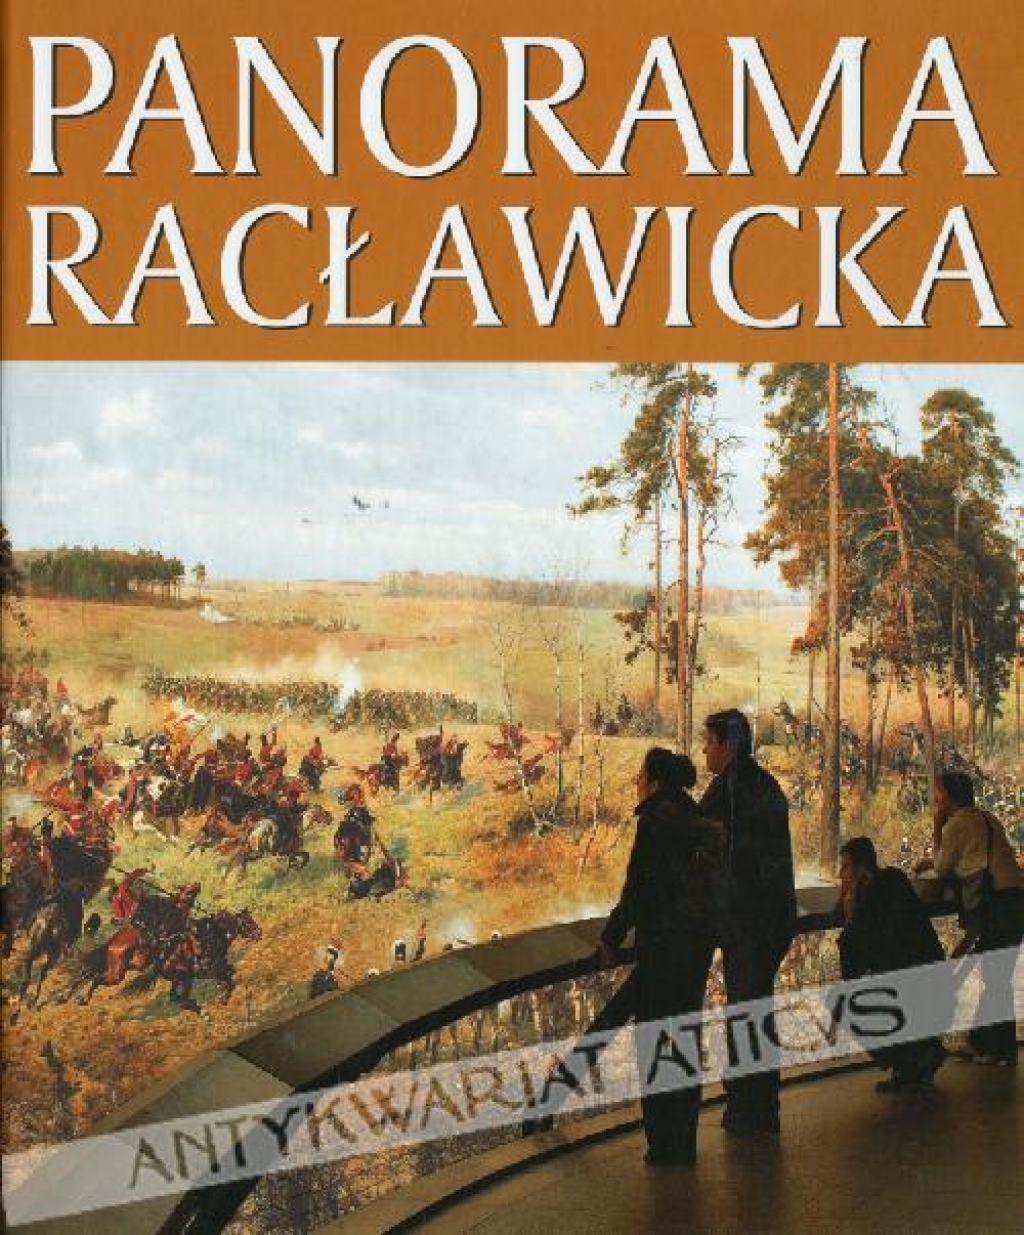 Panorama Racławicka The Racławice Panorama